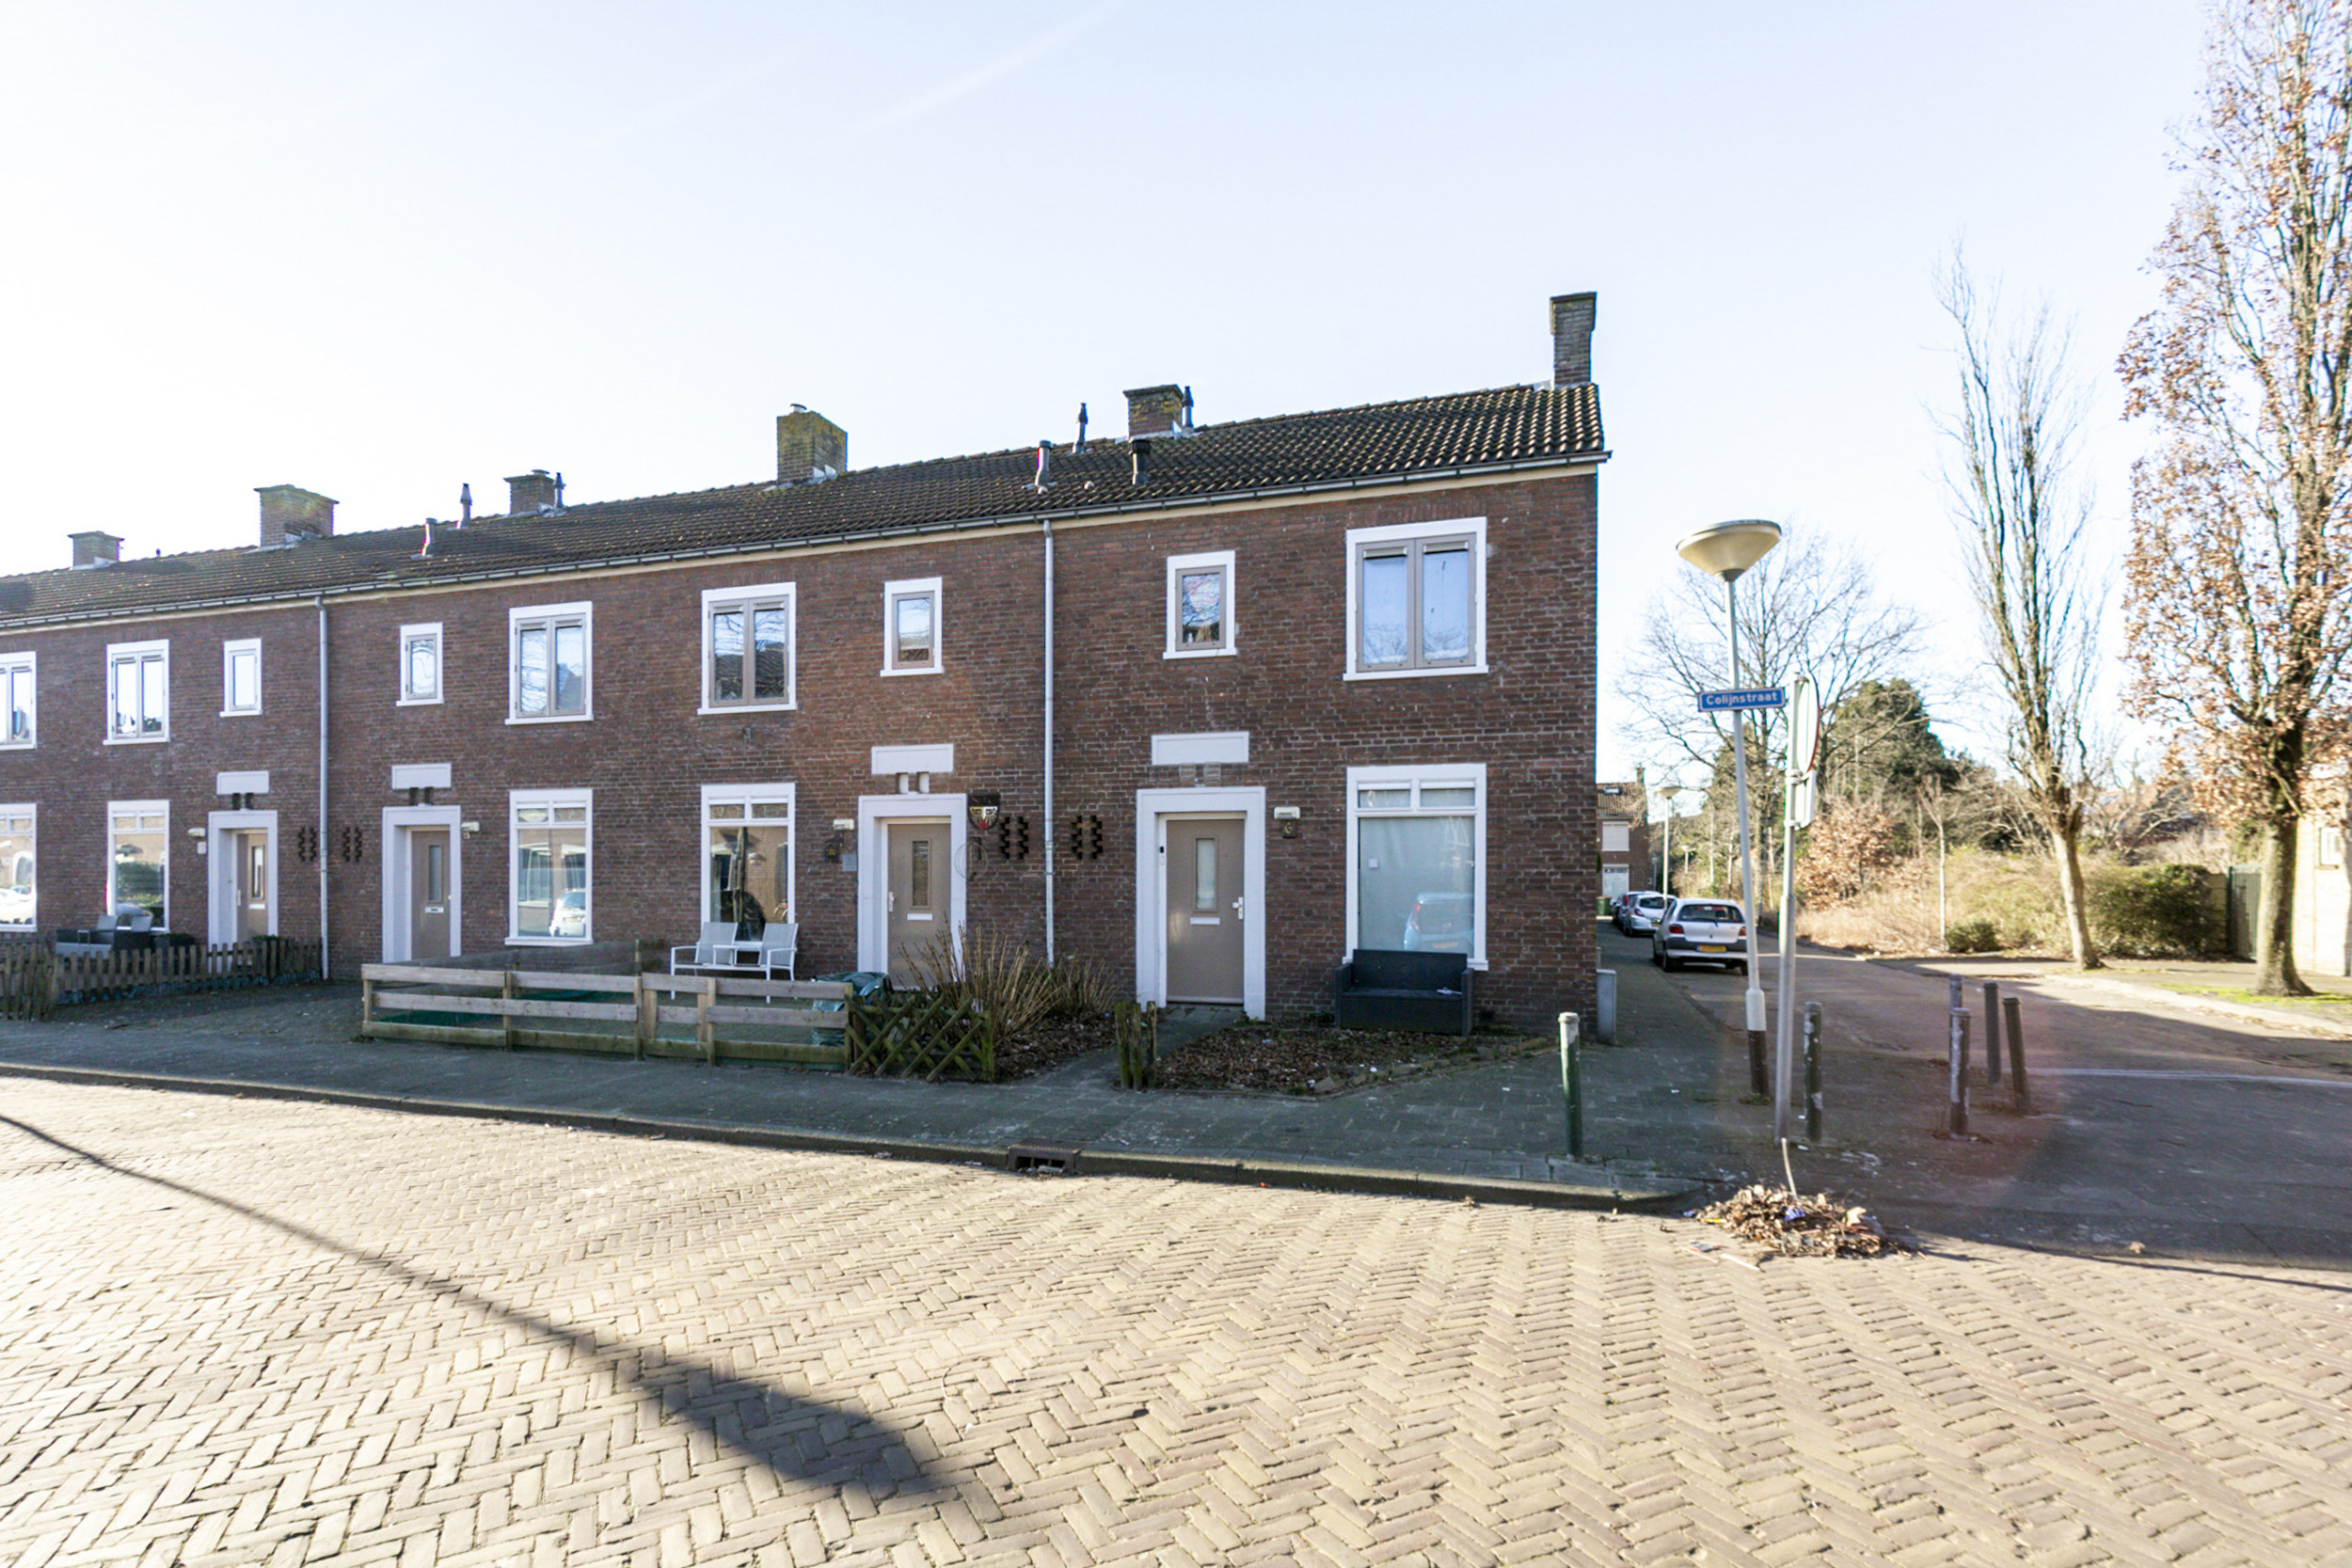 Colijnstraat 6, 4812 JH Breda, Nederland